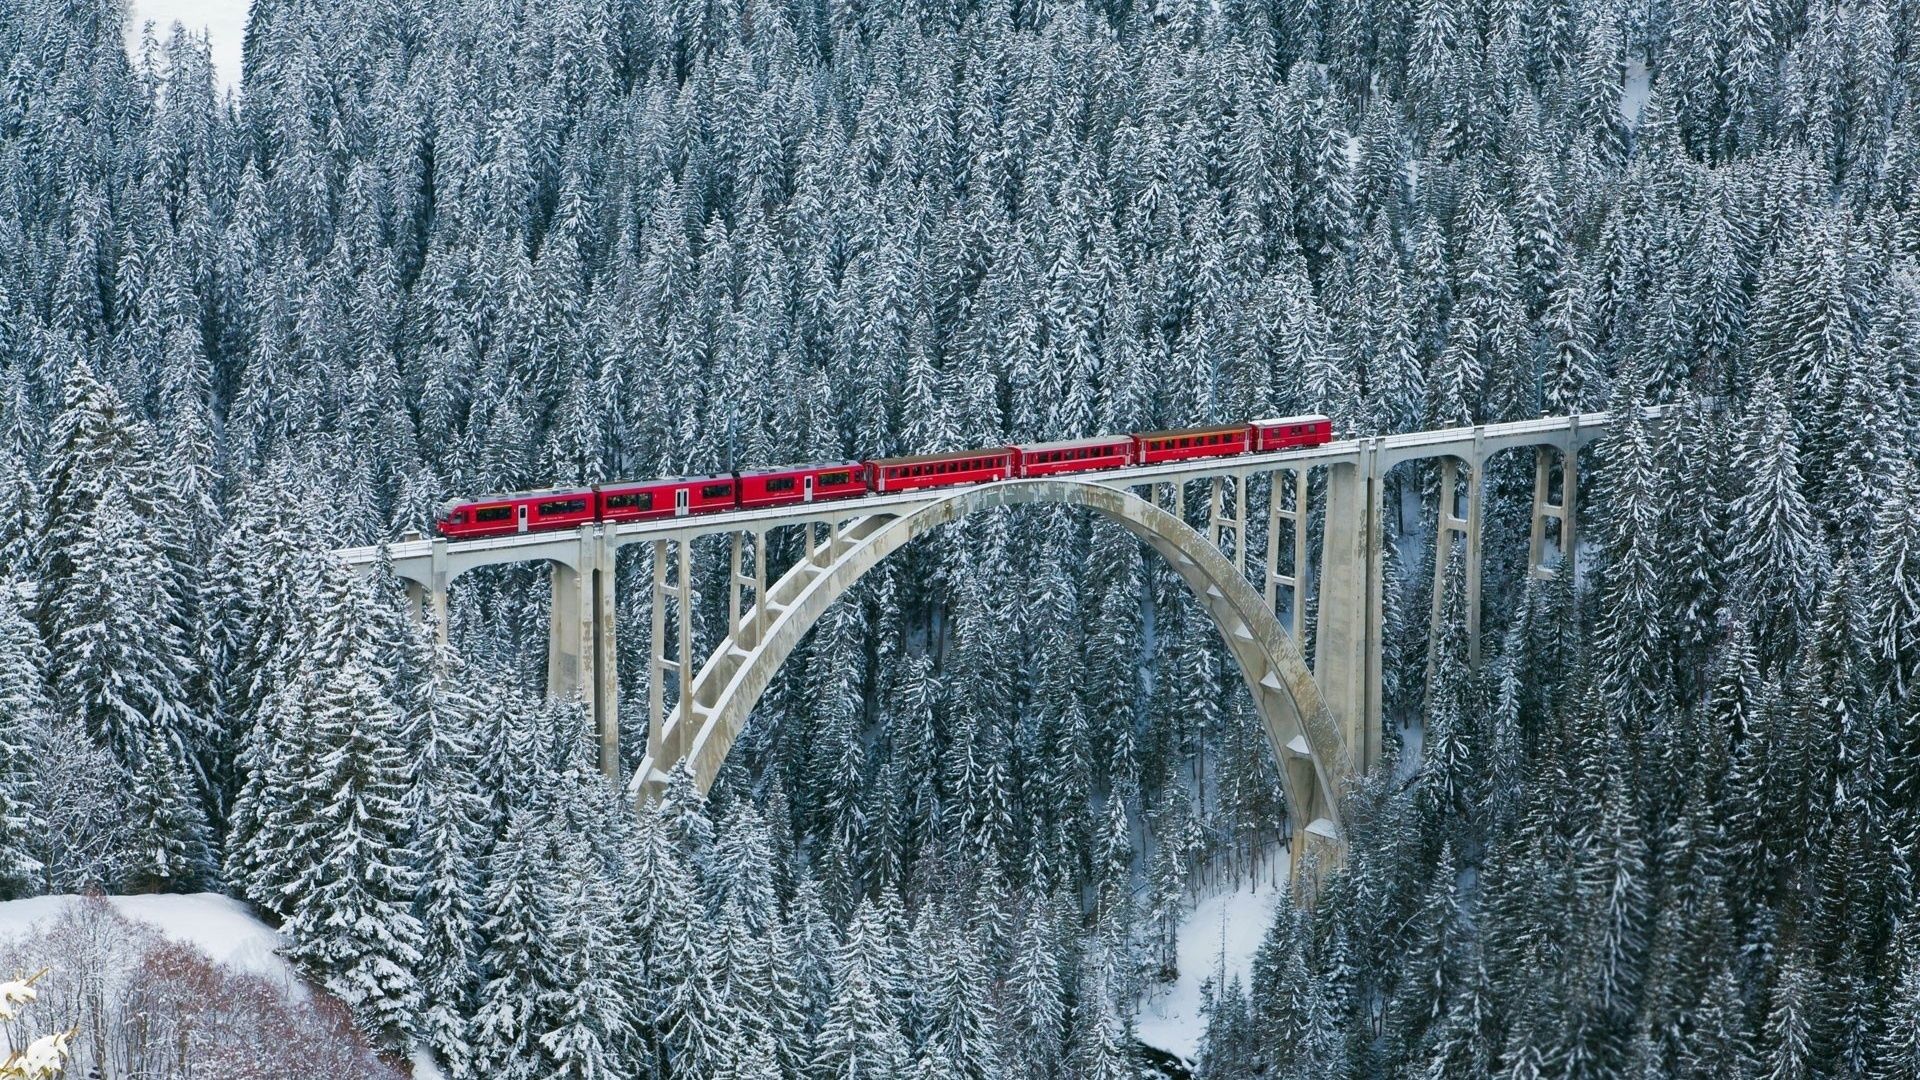 Switzerland alps mountains forest winter nature train bridge train super photo wallpaperx1080